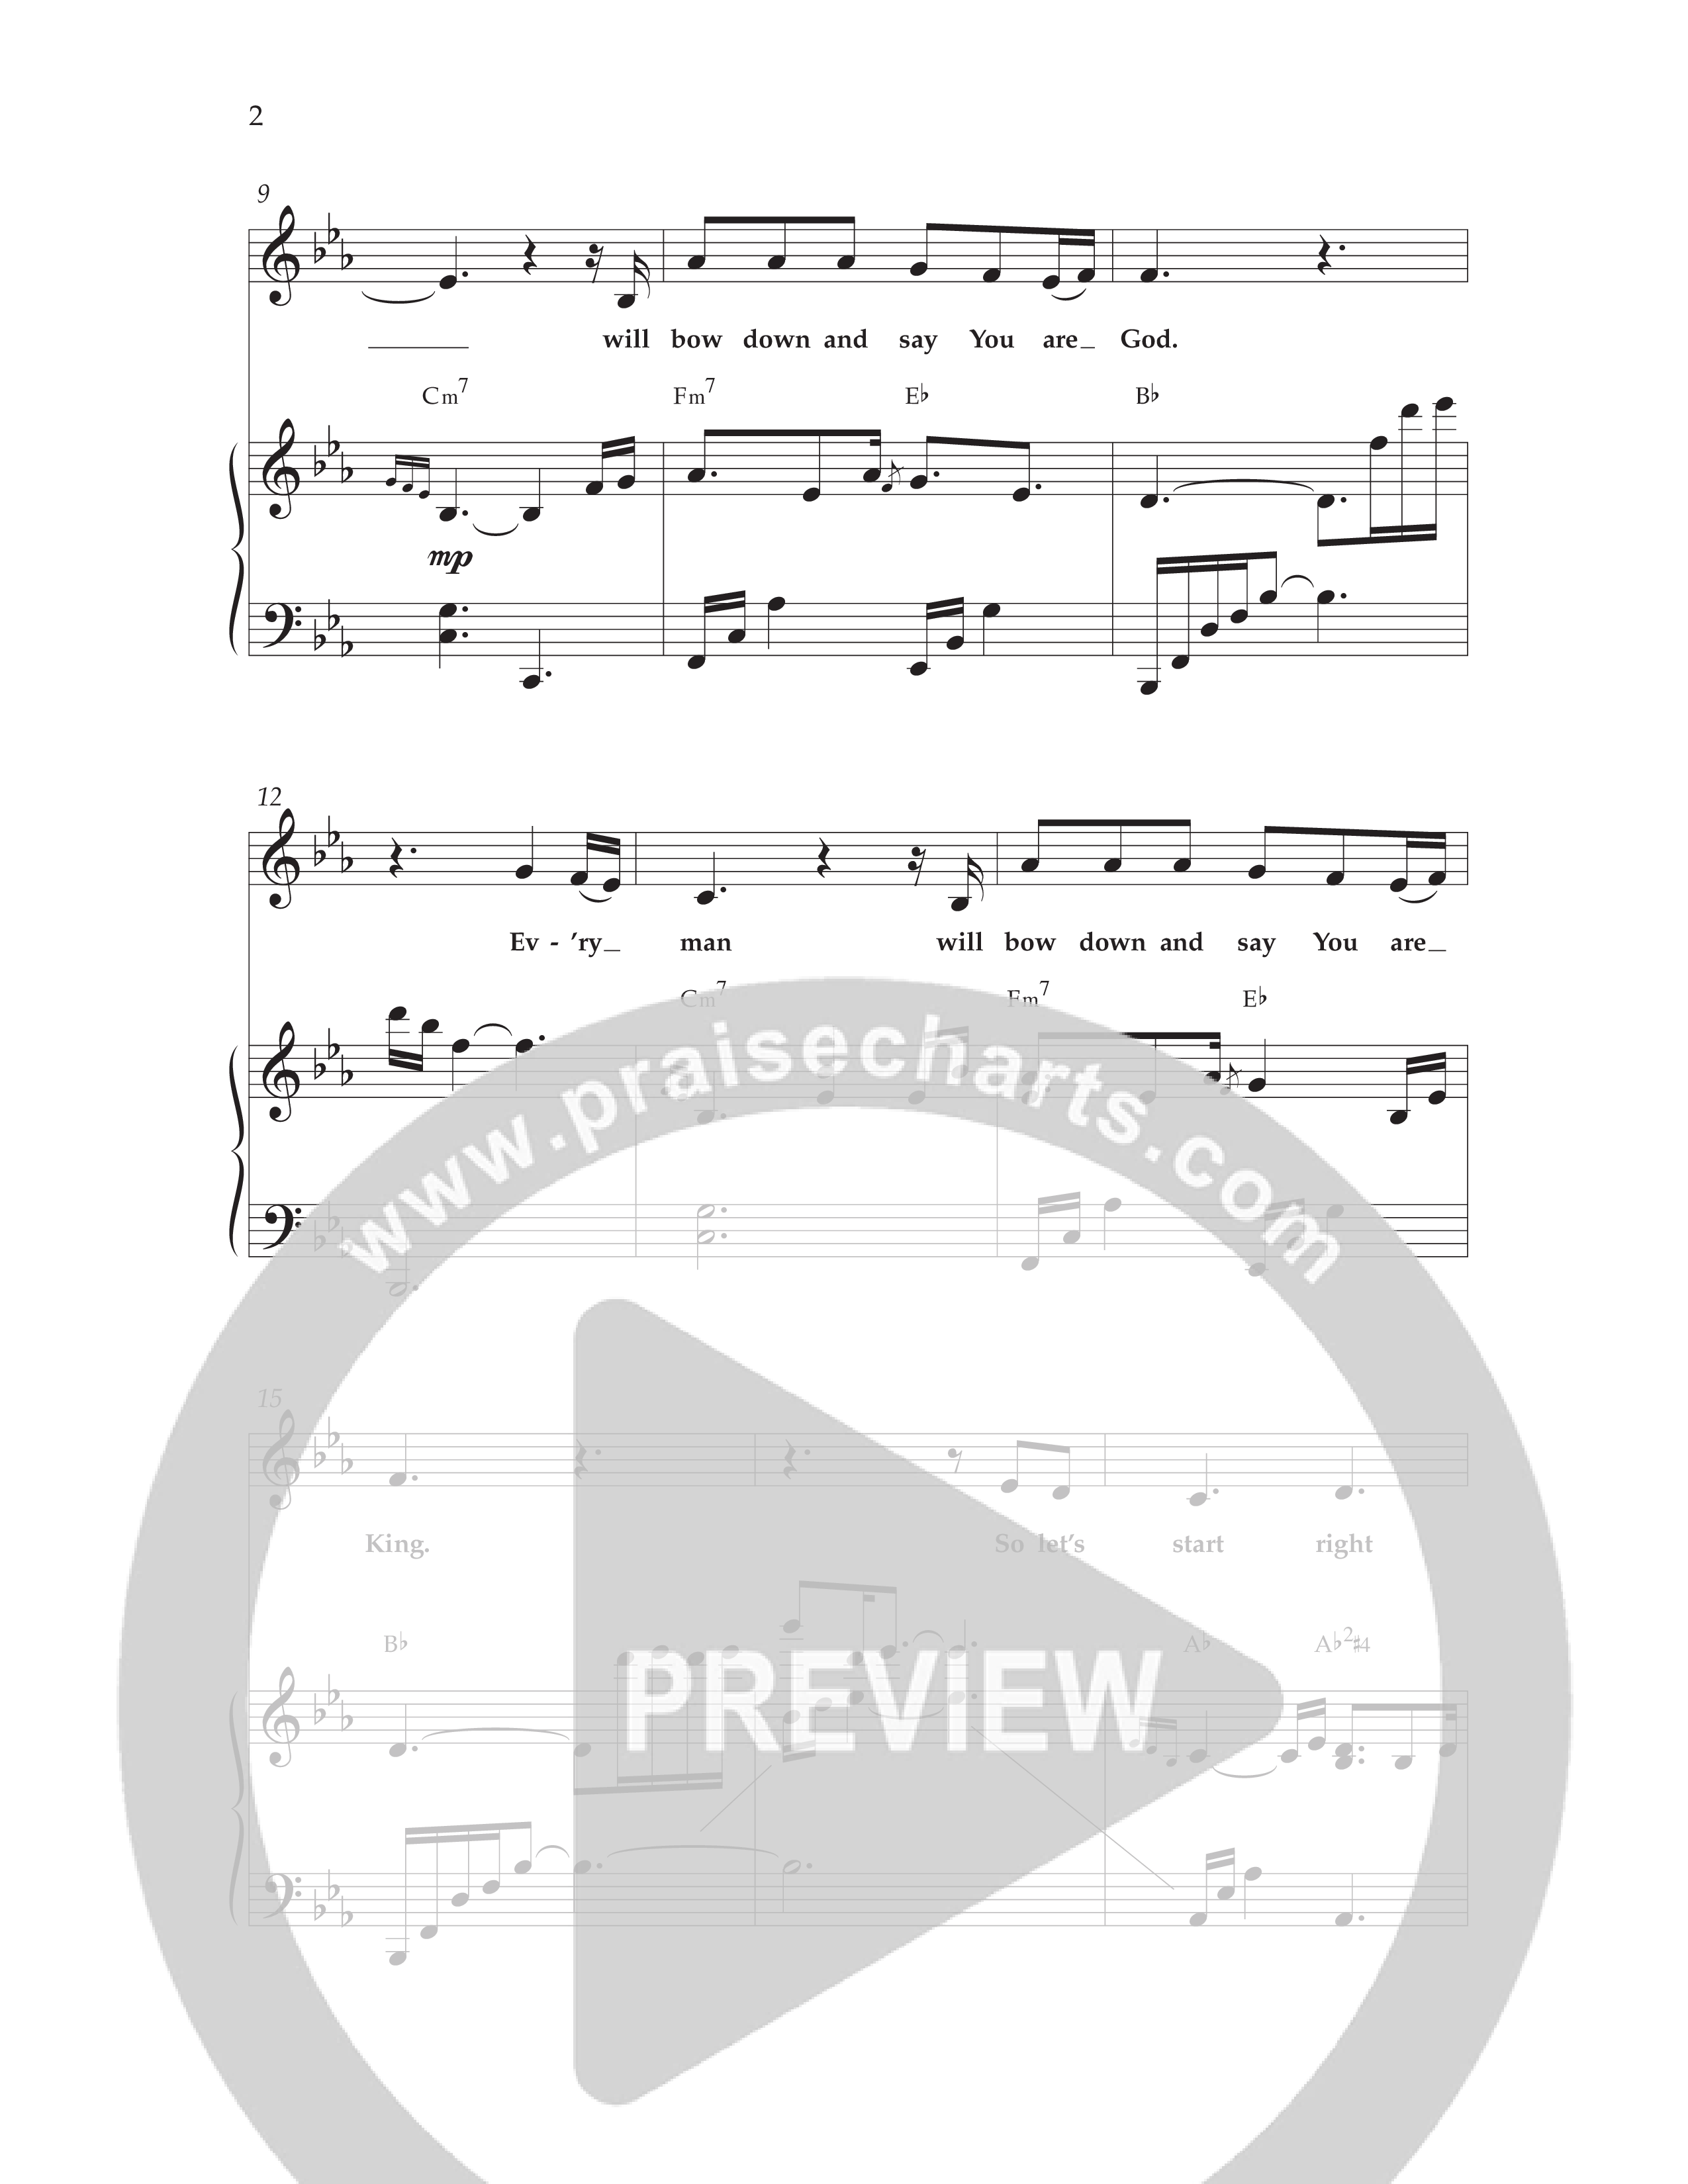 King Of Glory (Choral Anthem SATB) Anthem (SATB/Piano) (Lifeway Choral / Arr. David Wise / Orch. David Shipps)